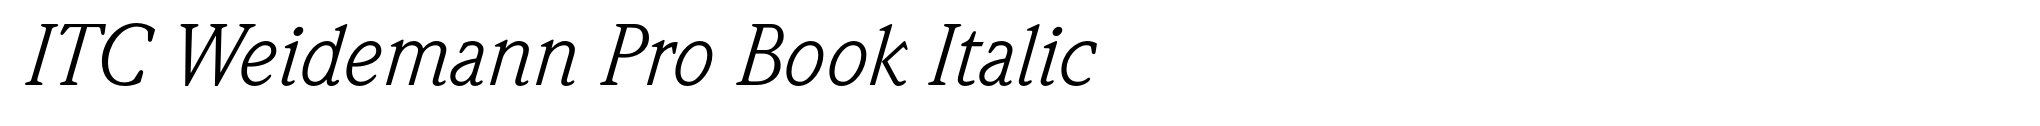 ITC Weidemann Pro Book Italic image